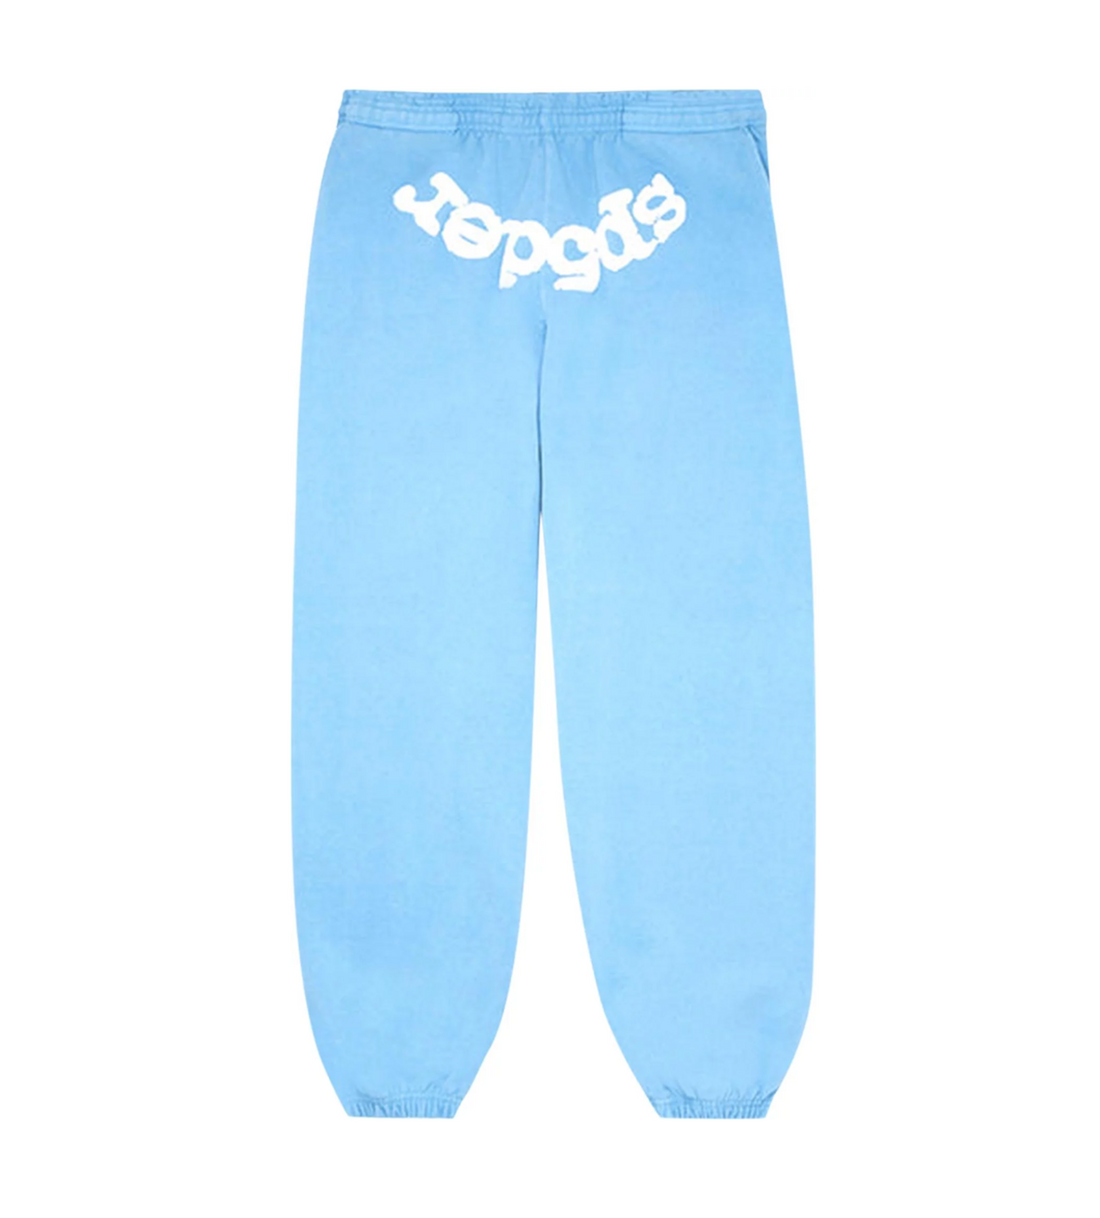 Product Image Of Sp5der Classic Sweatpants Light Blue Front View